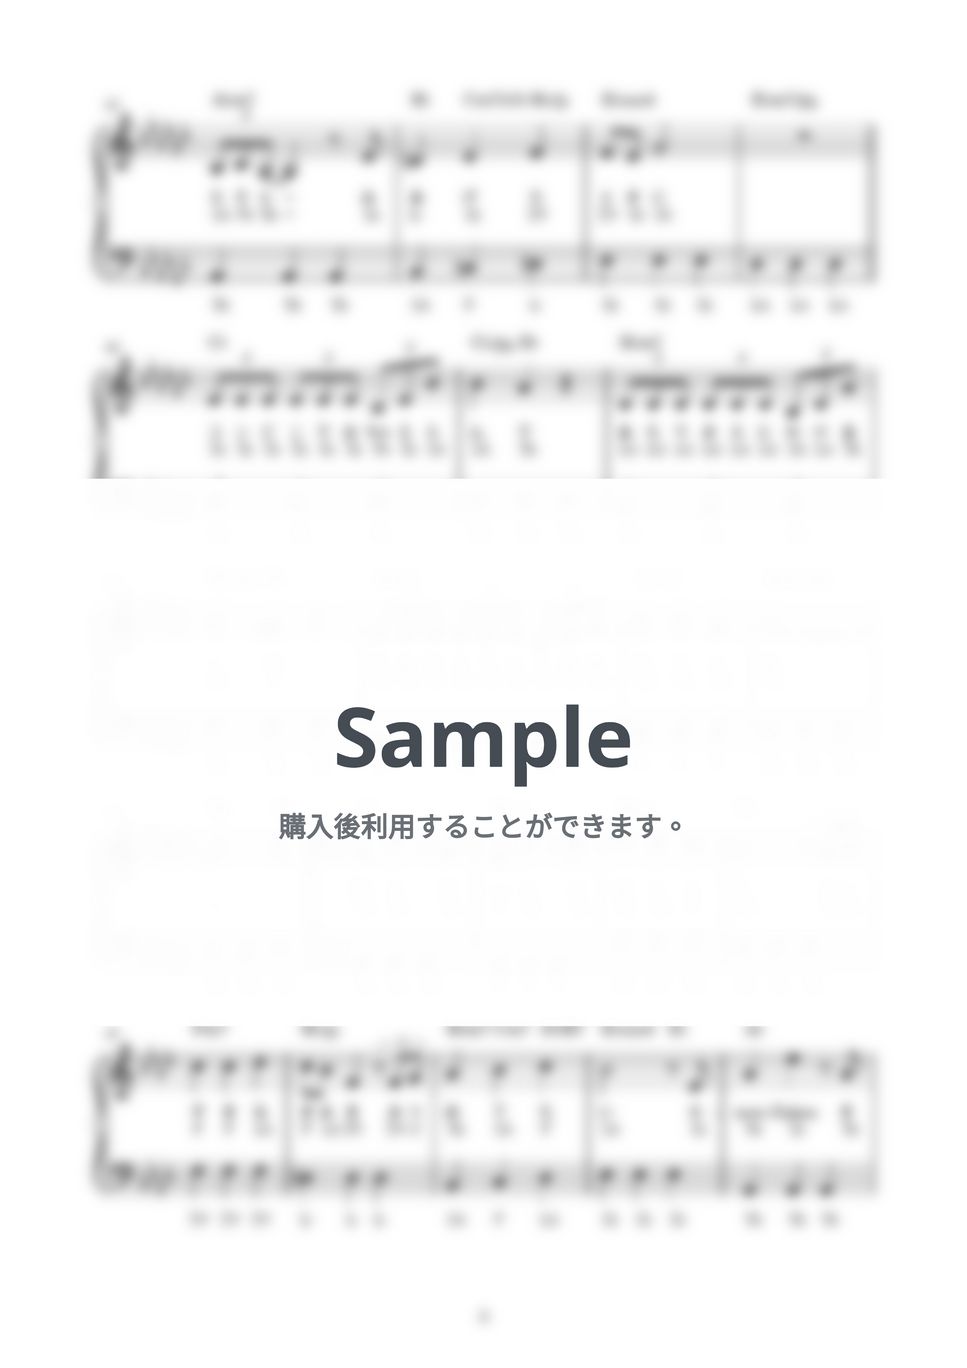 BoA - メリクリ (かんたん / 歌詞付き / ドレミ付き / 初心者) by piano.tokyo